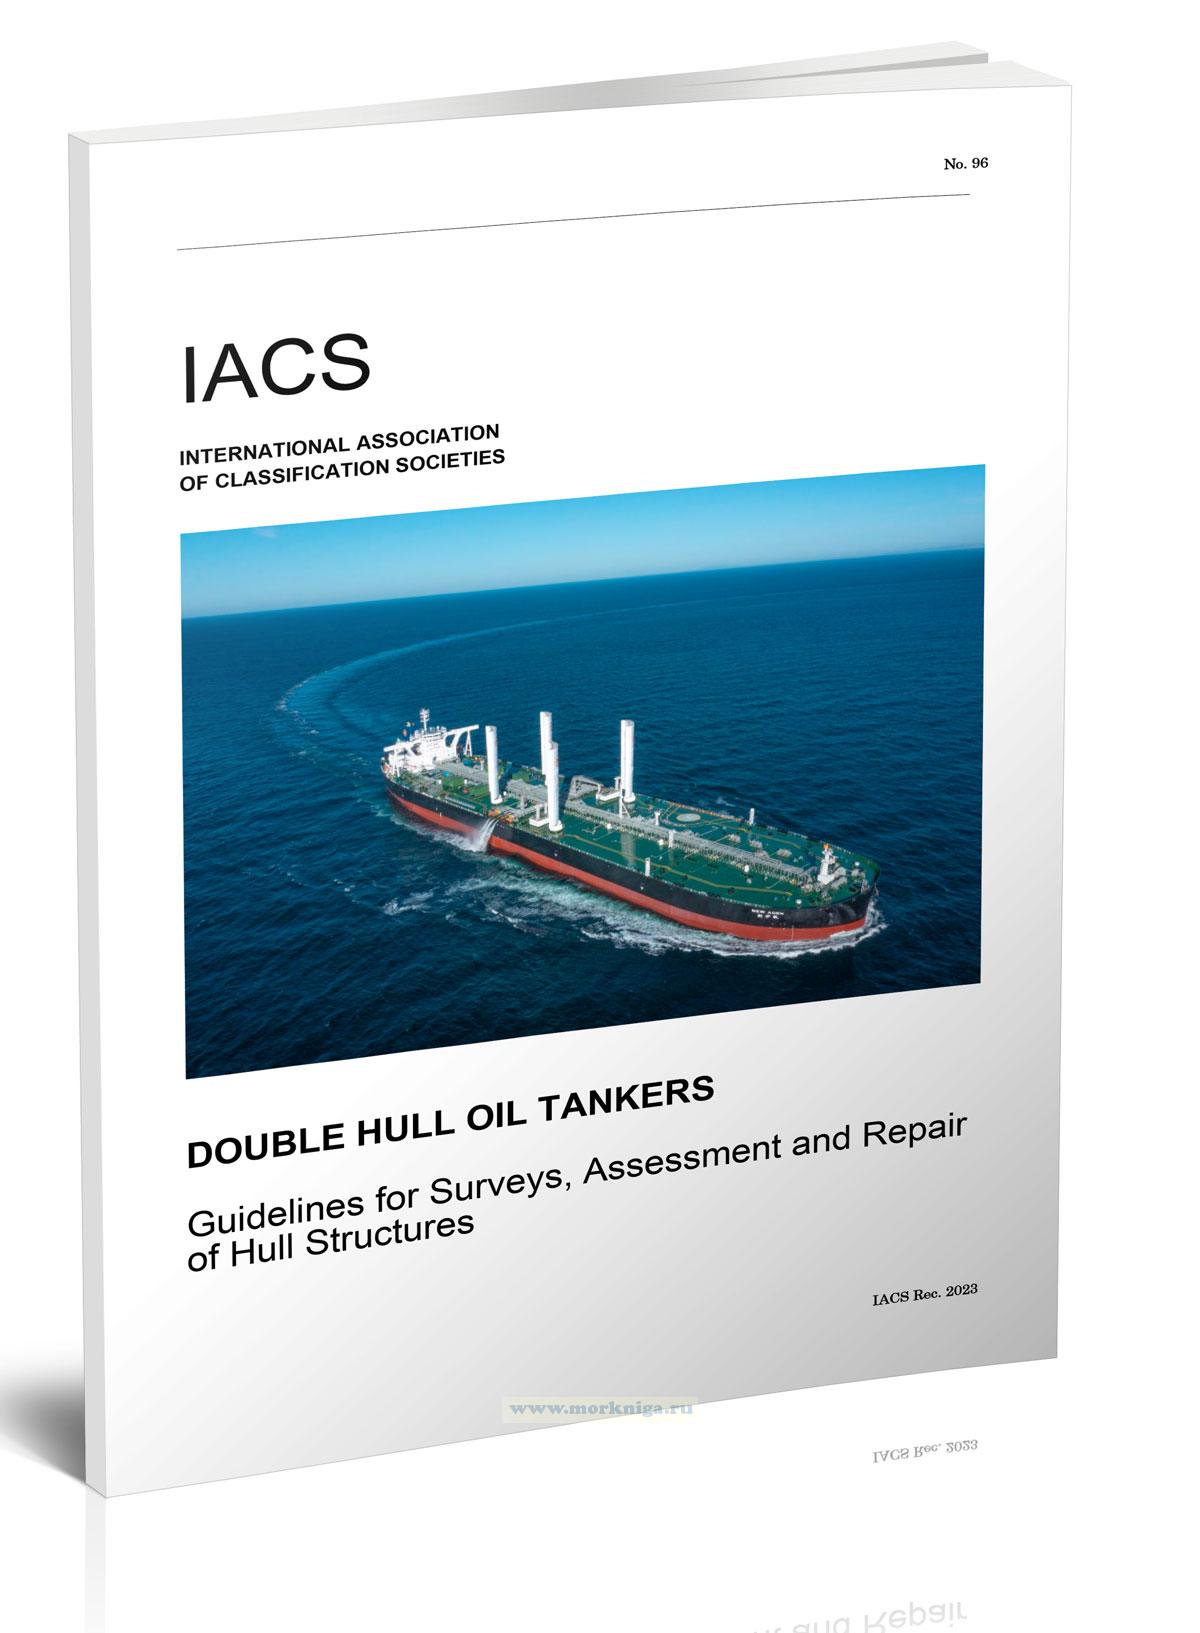 Double Hull Oil Tankers. Guidelines for Surveys, Assessment and Repair of Hull Structures IACS № 96 / Двухкорпусные нефтяные танкеры. Руководство по обследованию, оценке и ремонту корпусных конструкций